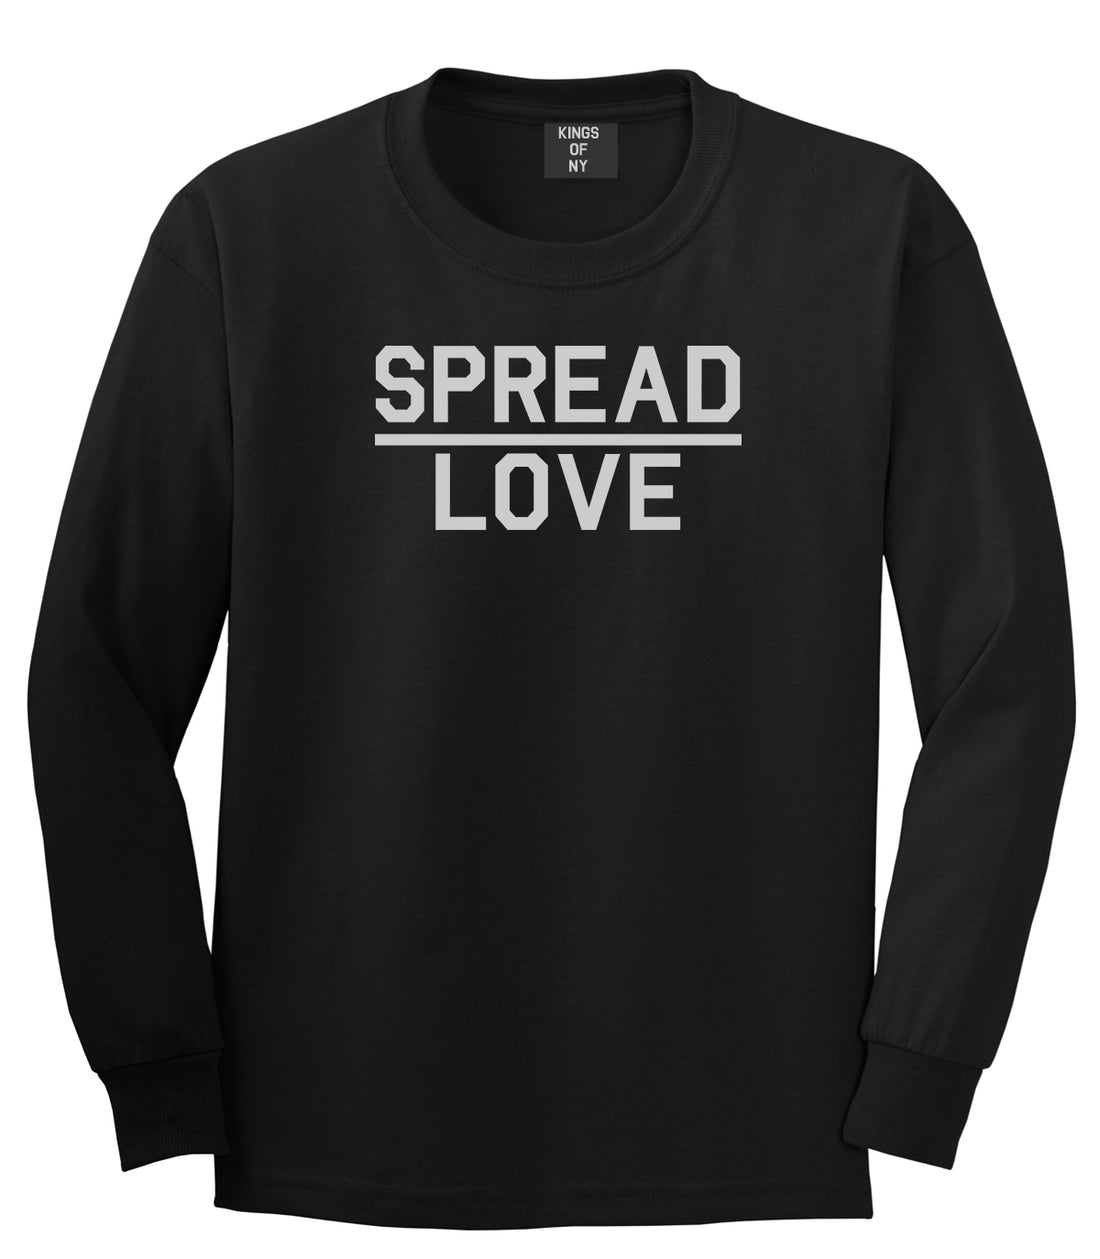 Spread Love Brooklyn Long Sleeve T-Shirt in Black